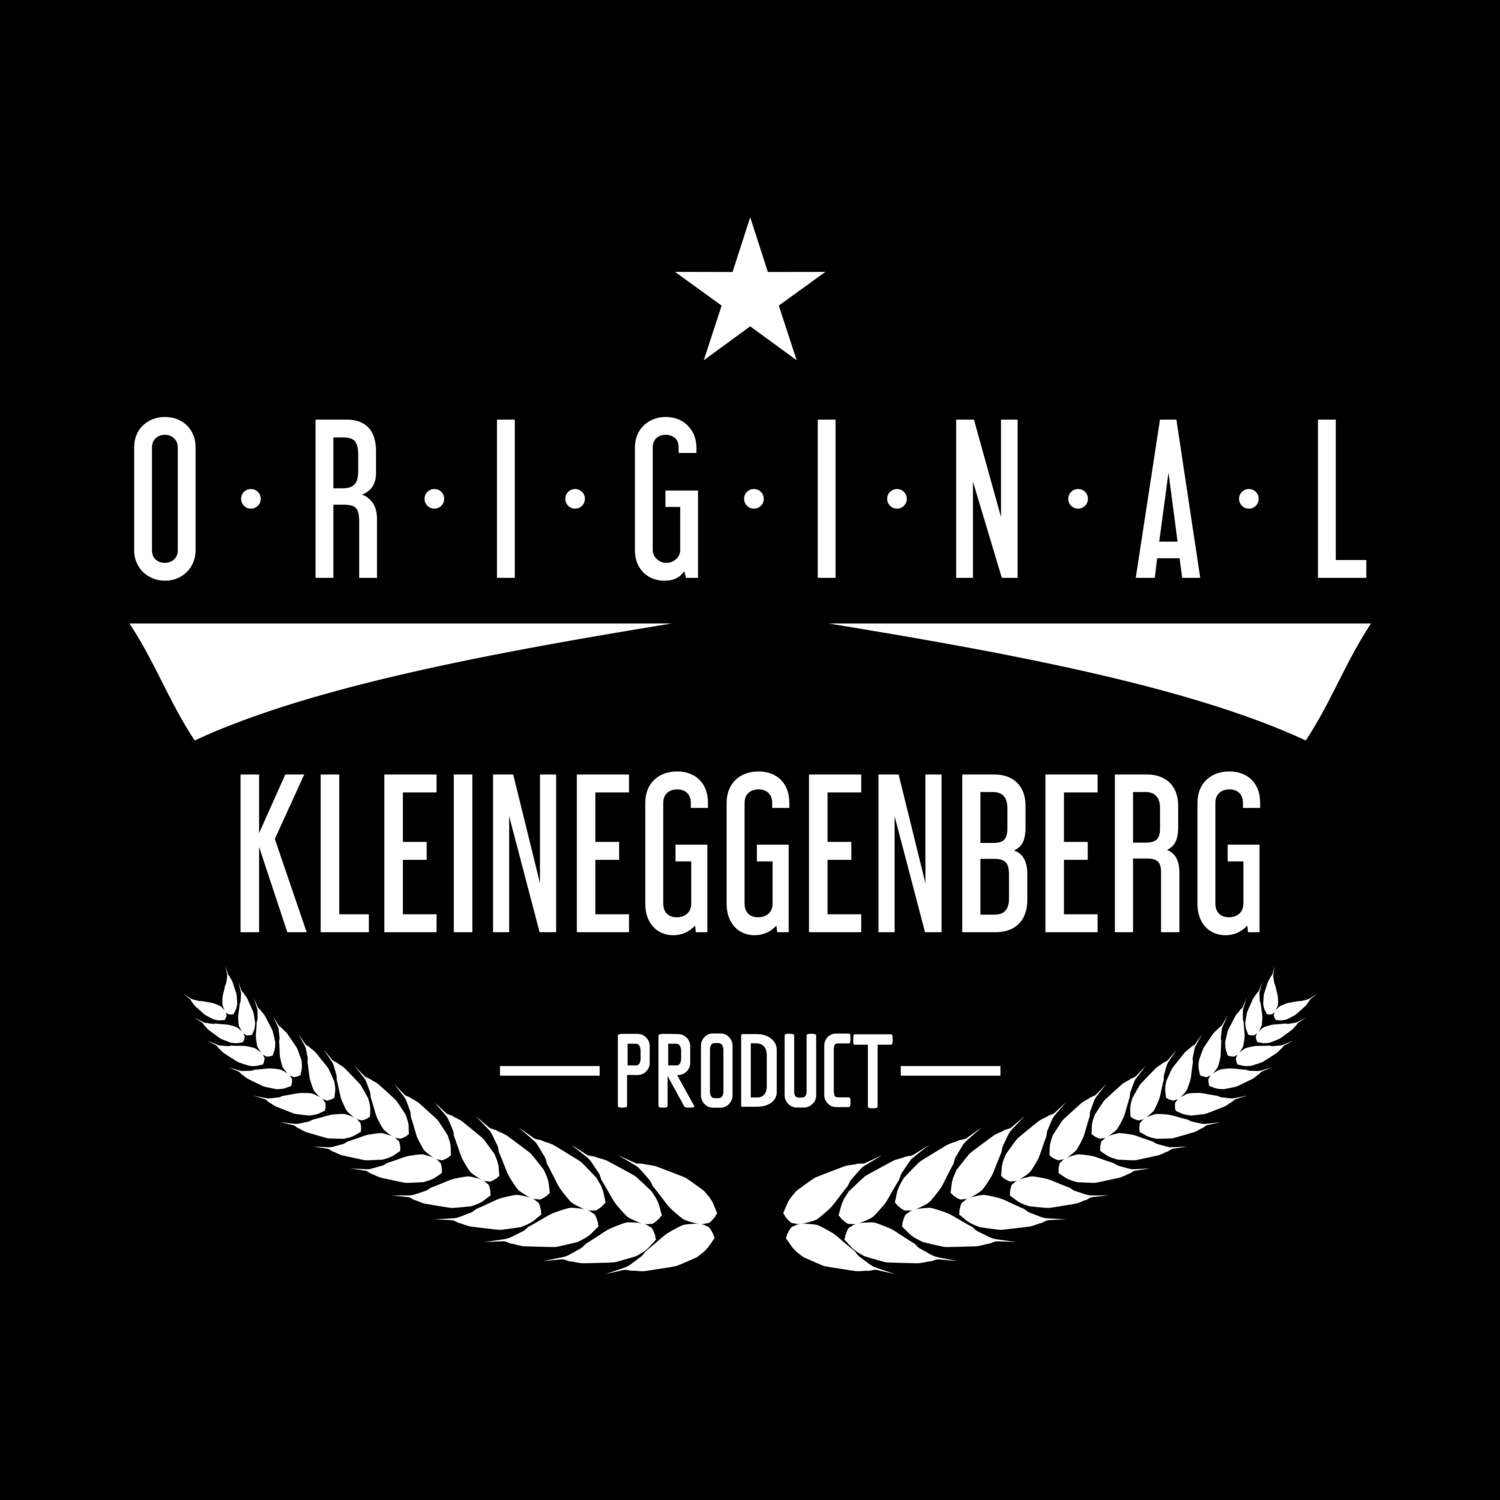 Kleineggenberg T-Shirt »Original Product«